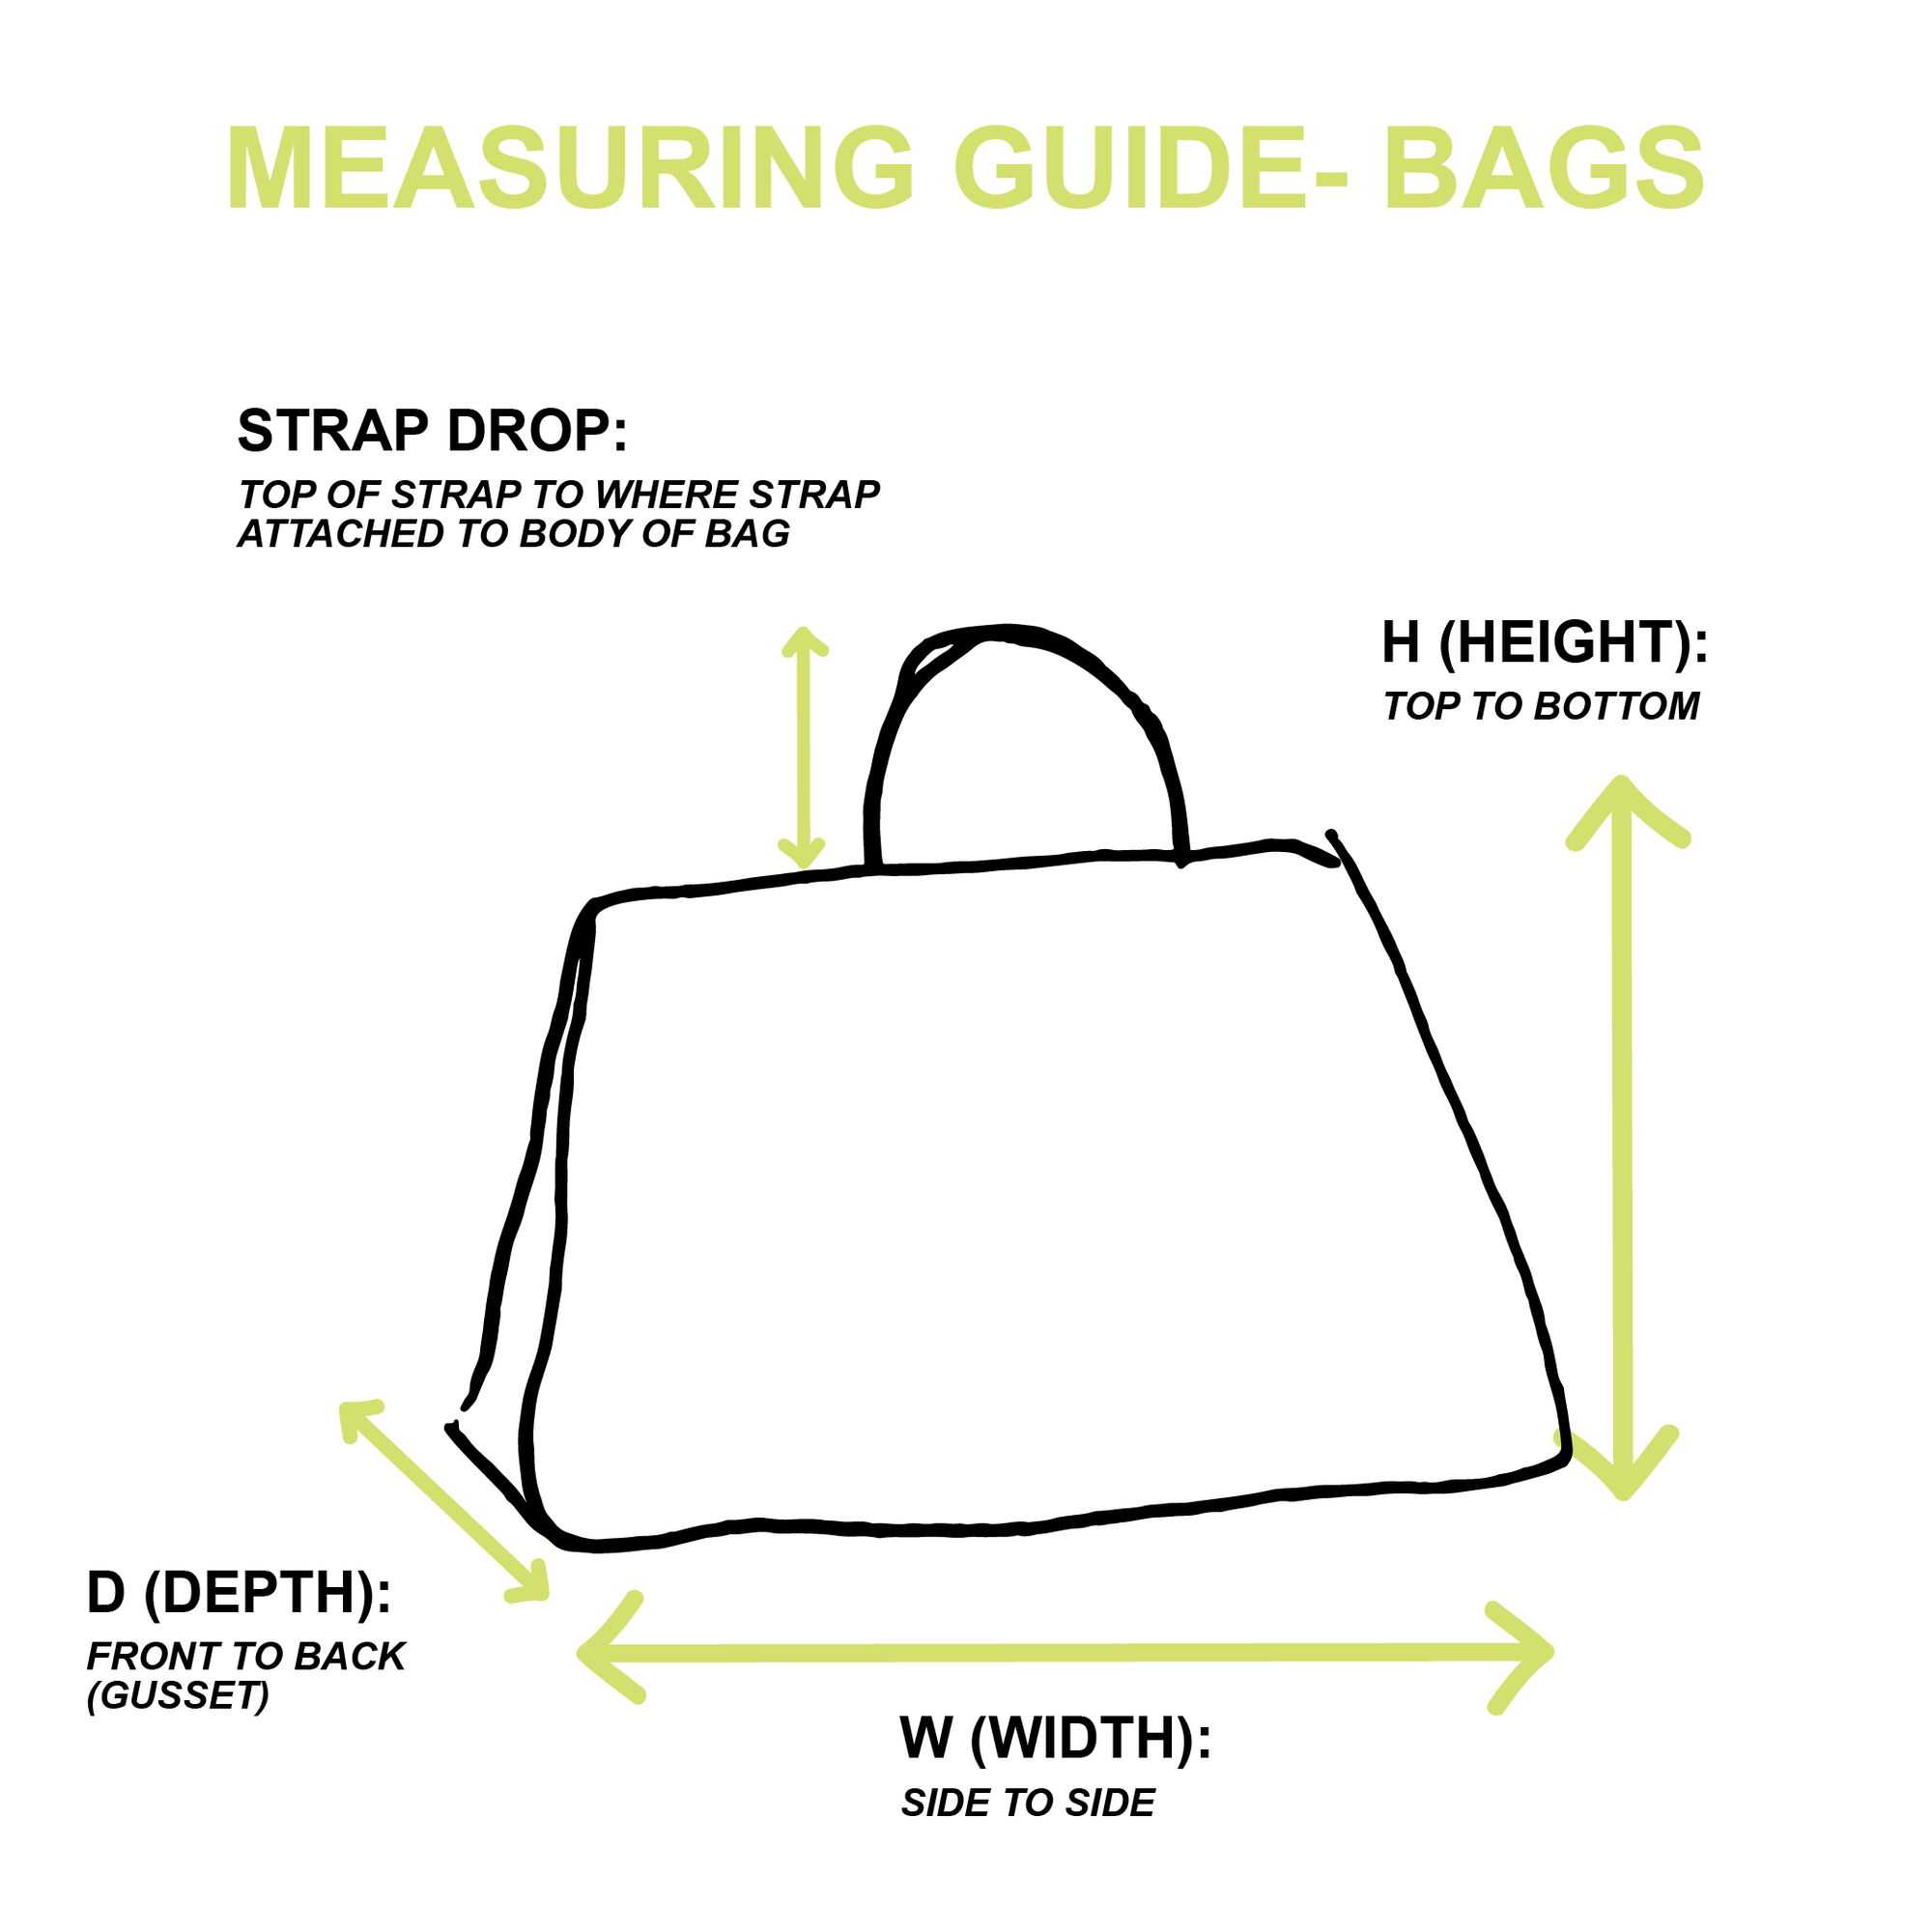 CHANEL Medium Coco Handle Flap Bag – Past & Present Boutique